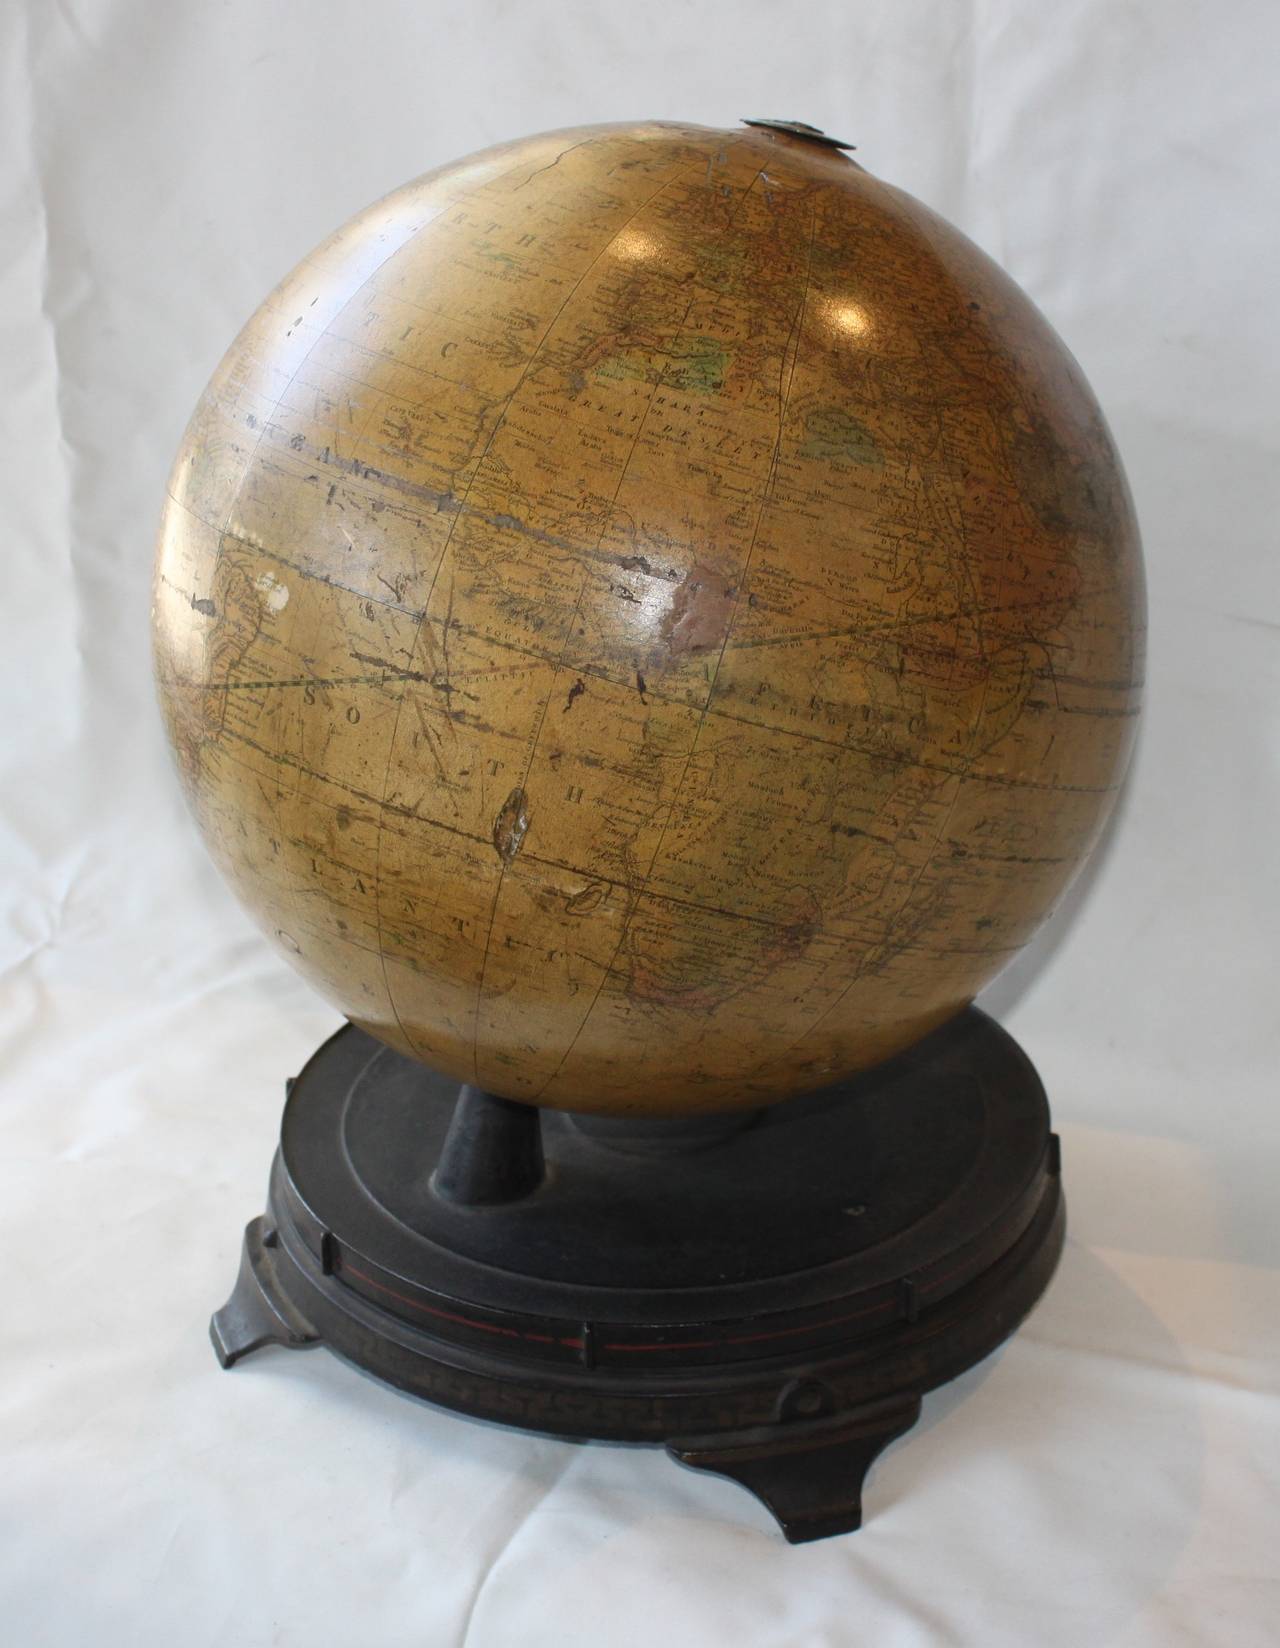 Fitz globe on iron base cerca 1855-60 Boston, MA.